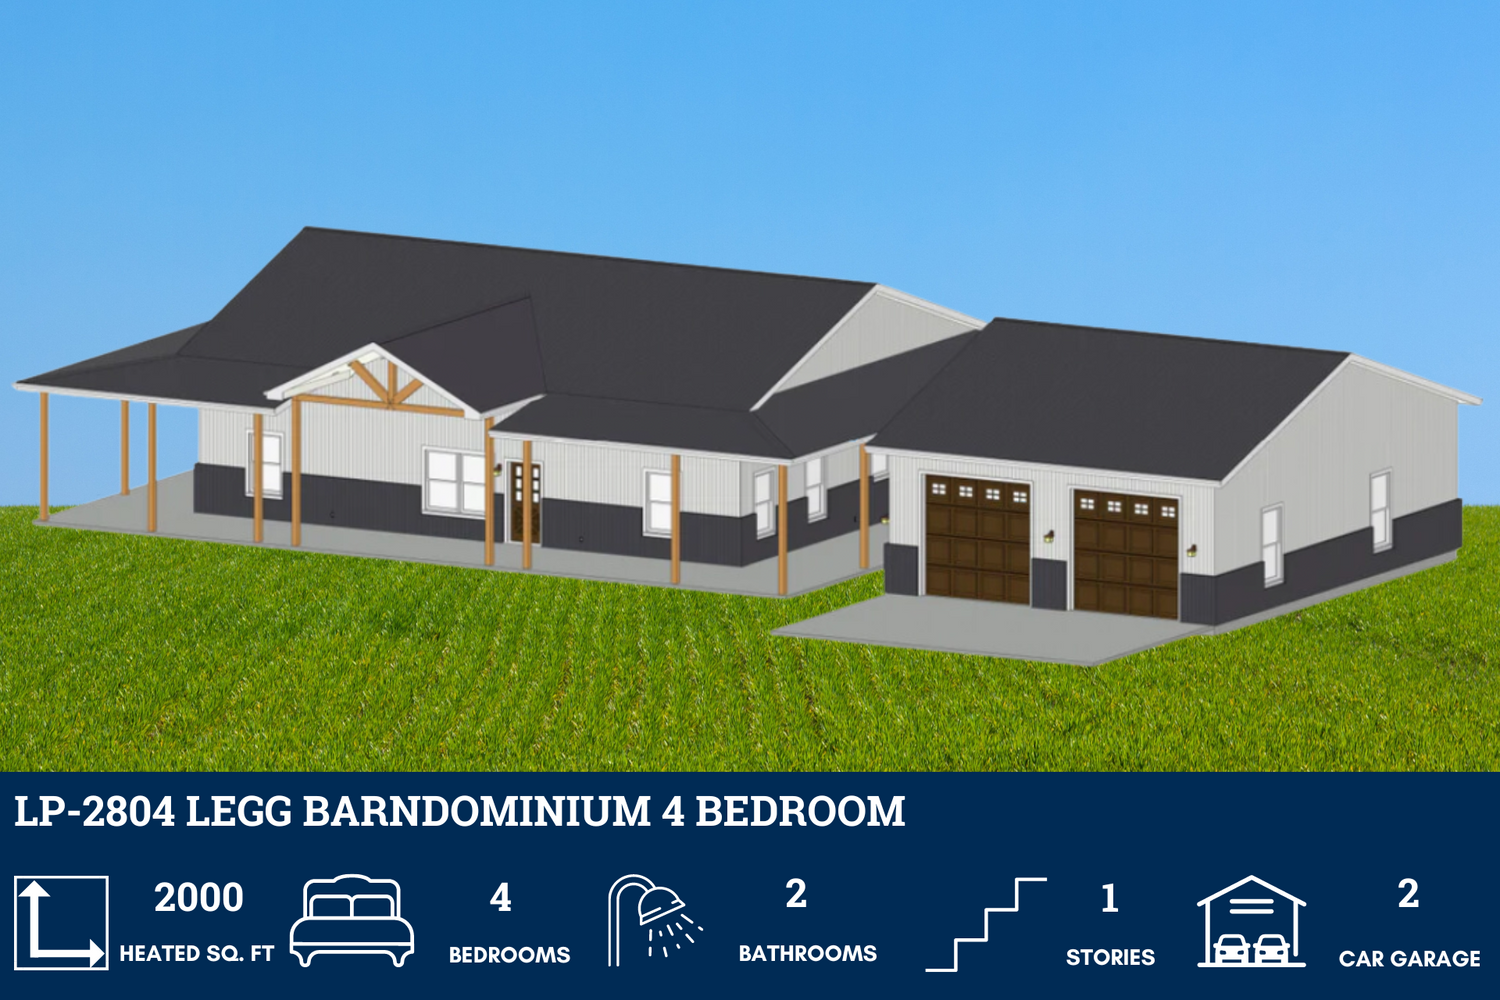 4 Bedroom 2 Bathroom Barndominium House Plans